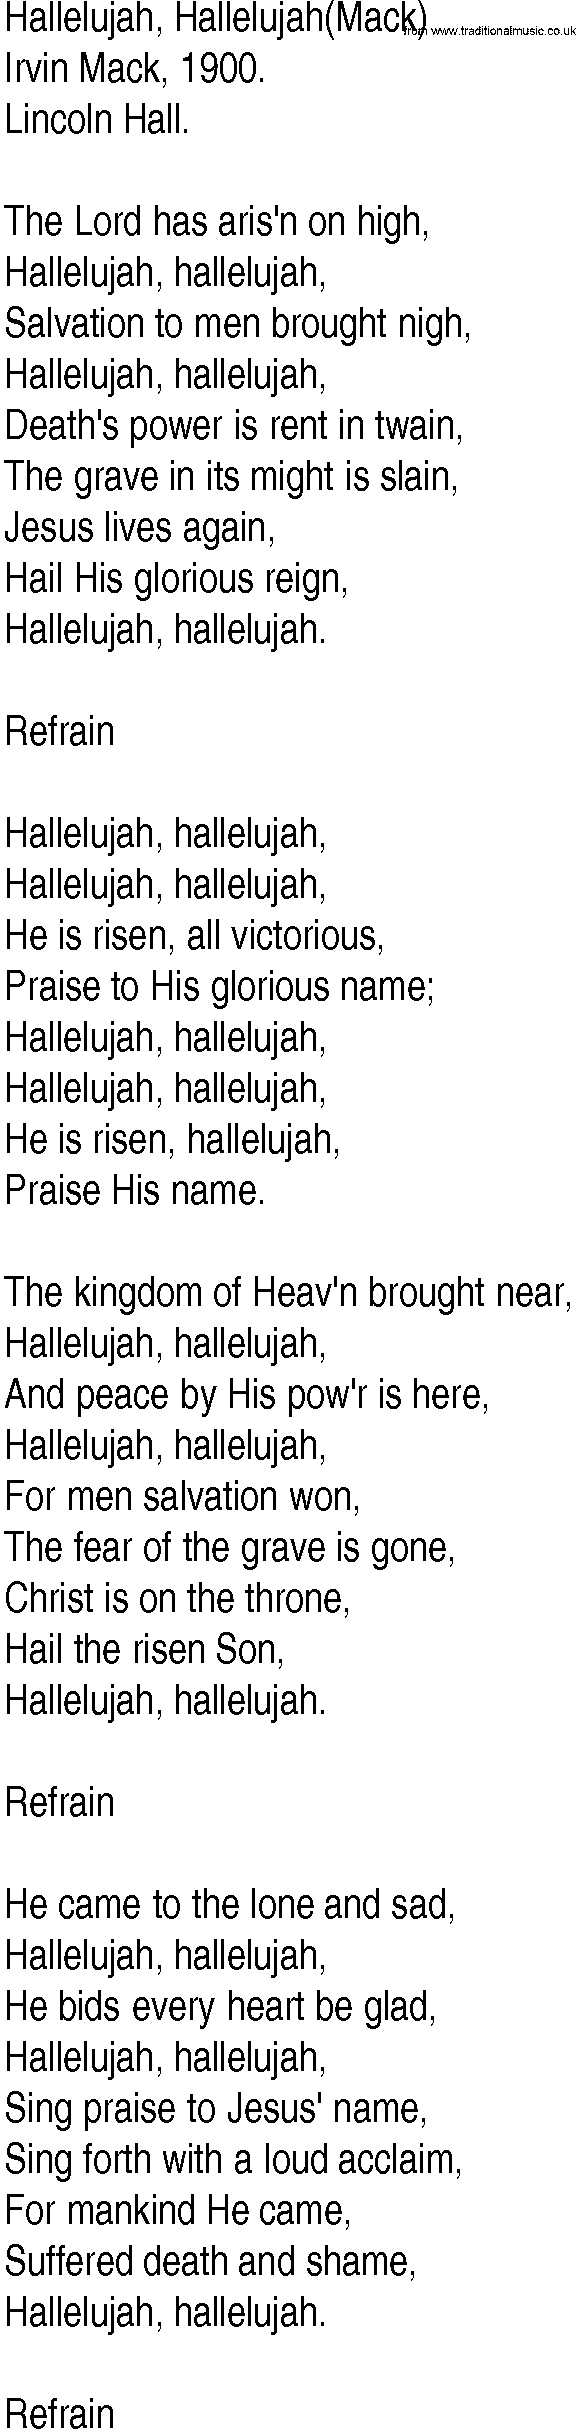 Hymn and Gospel Song: Hallelujah, Hallelujah(Mack) by Irvin Mack lyrics